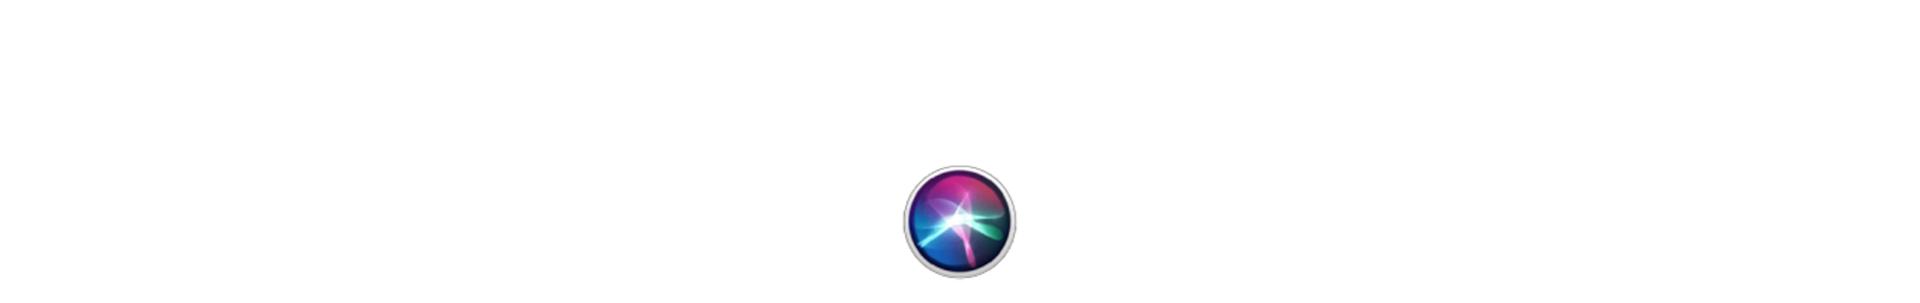 Siri Shortcuts logo